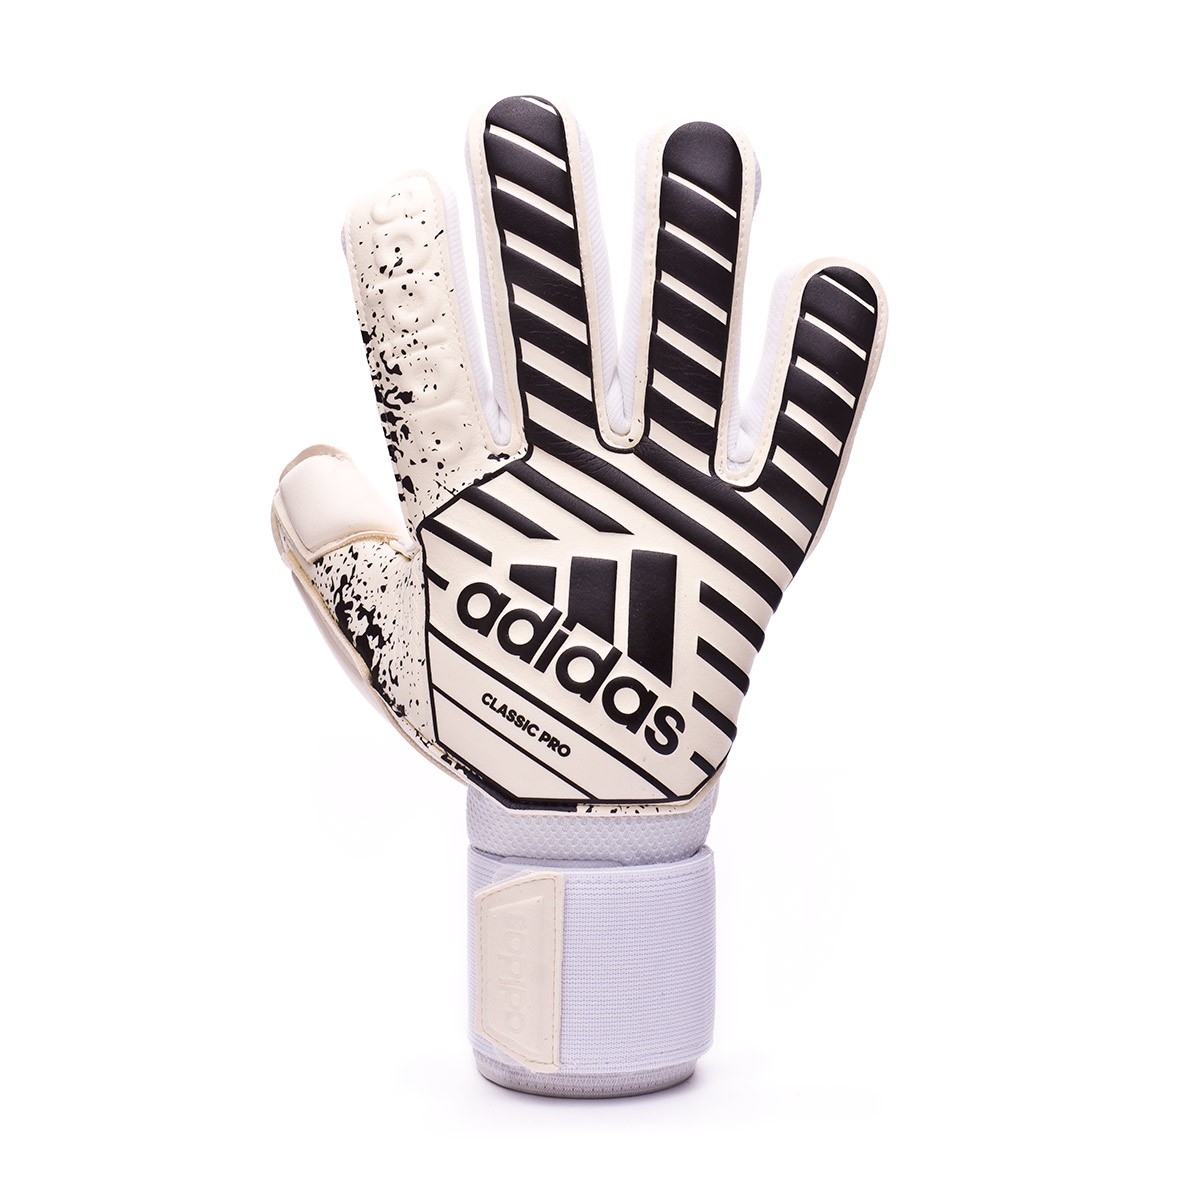 adidas classic pro gloves